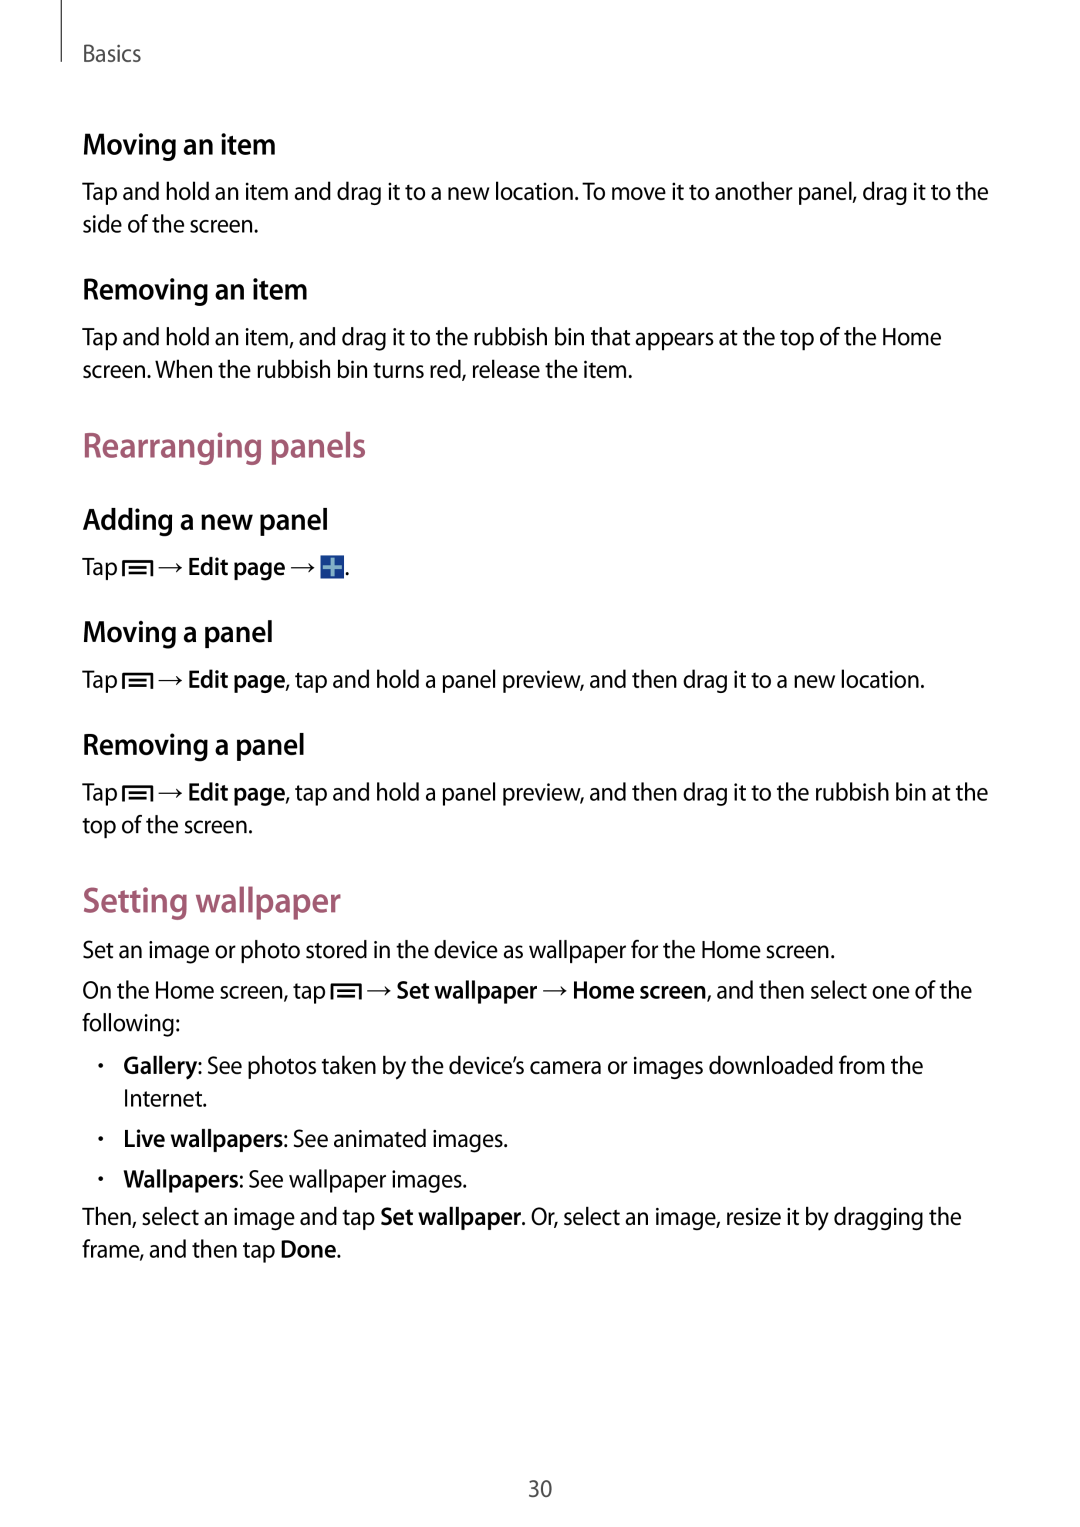 Samsung GT-I9060EGDBTC Rearranging panels, Setting wallpaper, Moving an item, Removing an item, Adding a new panel, Basics 